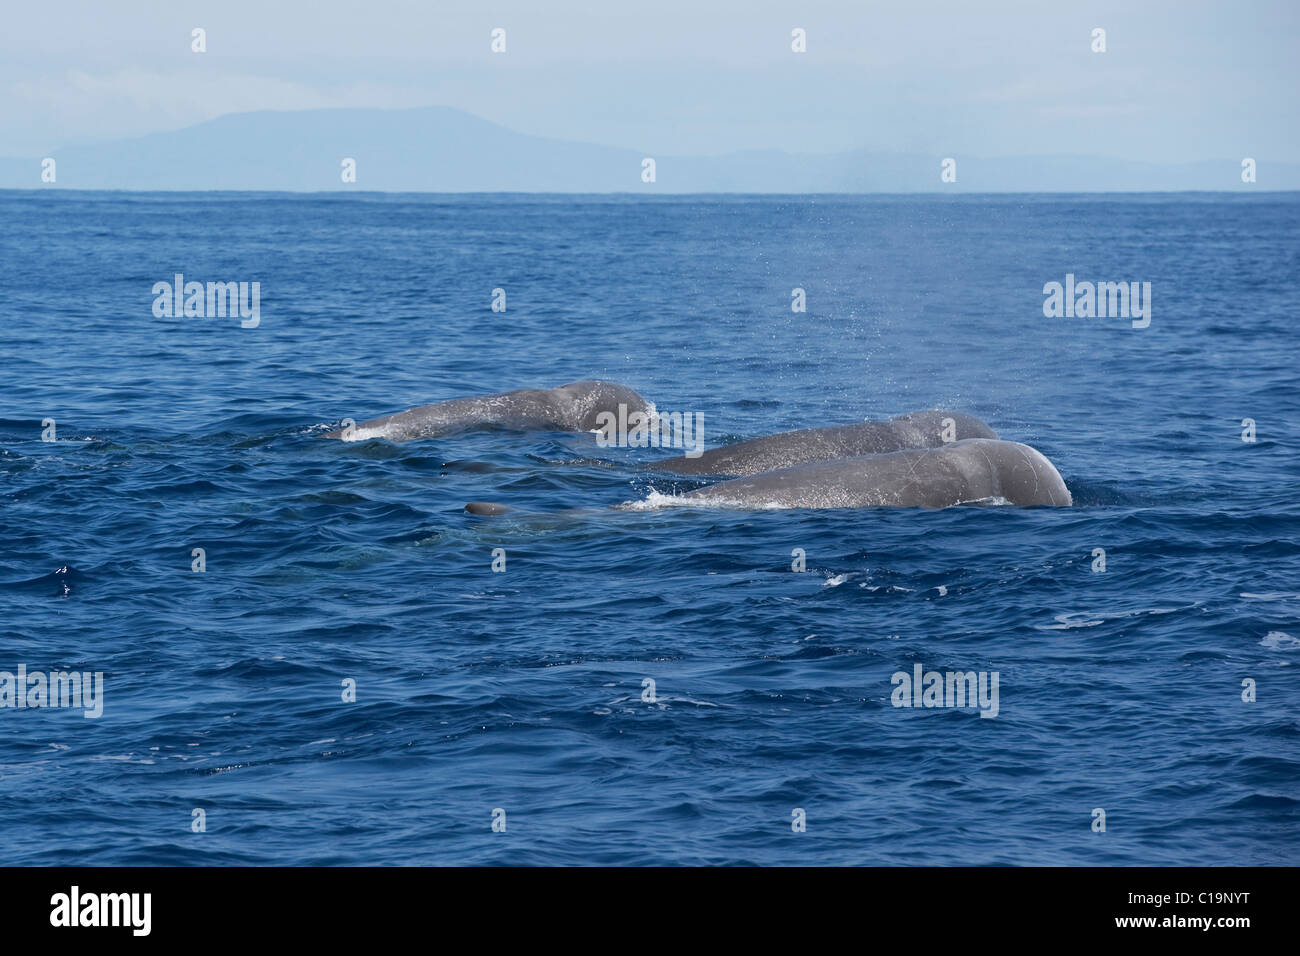 Northern Bottlenose Whale (Hyperoodon ampullatus) three adult animals surfacing, rare unusual image. Azores, Atlantic Ocean. Stock Photo